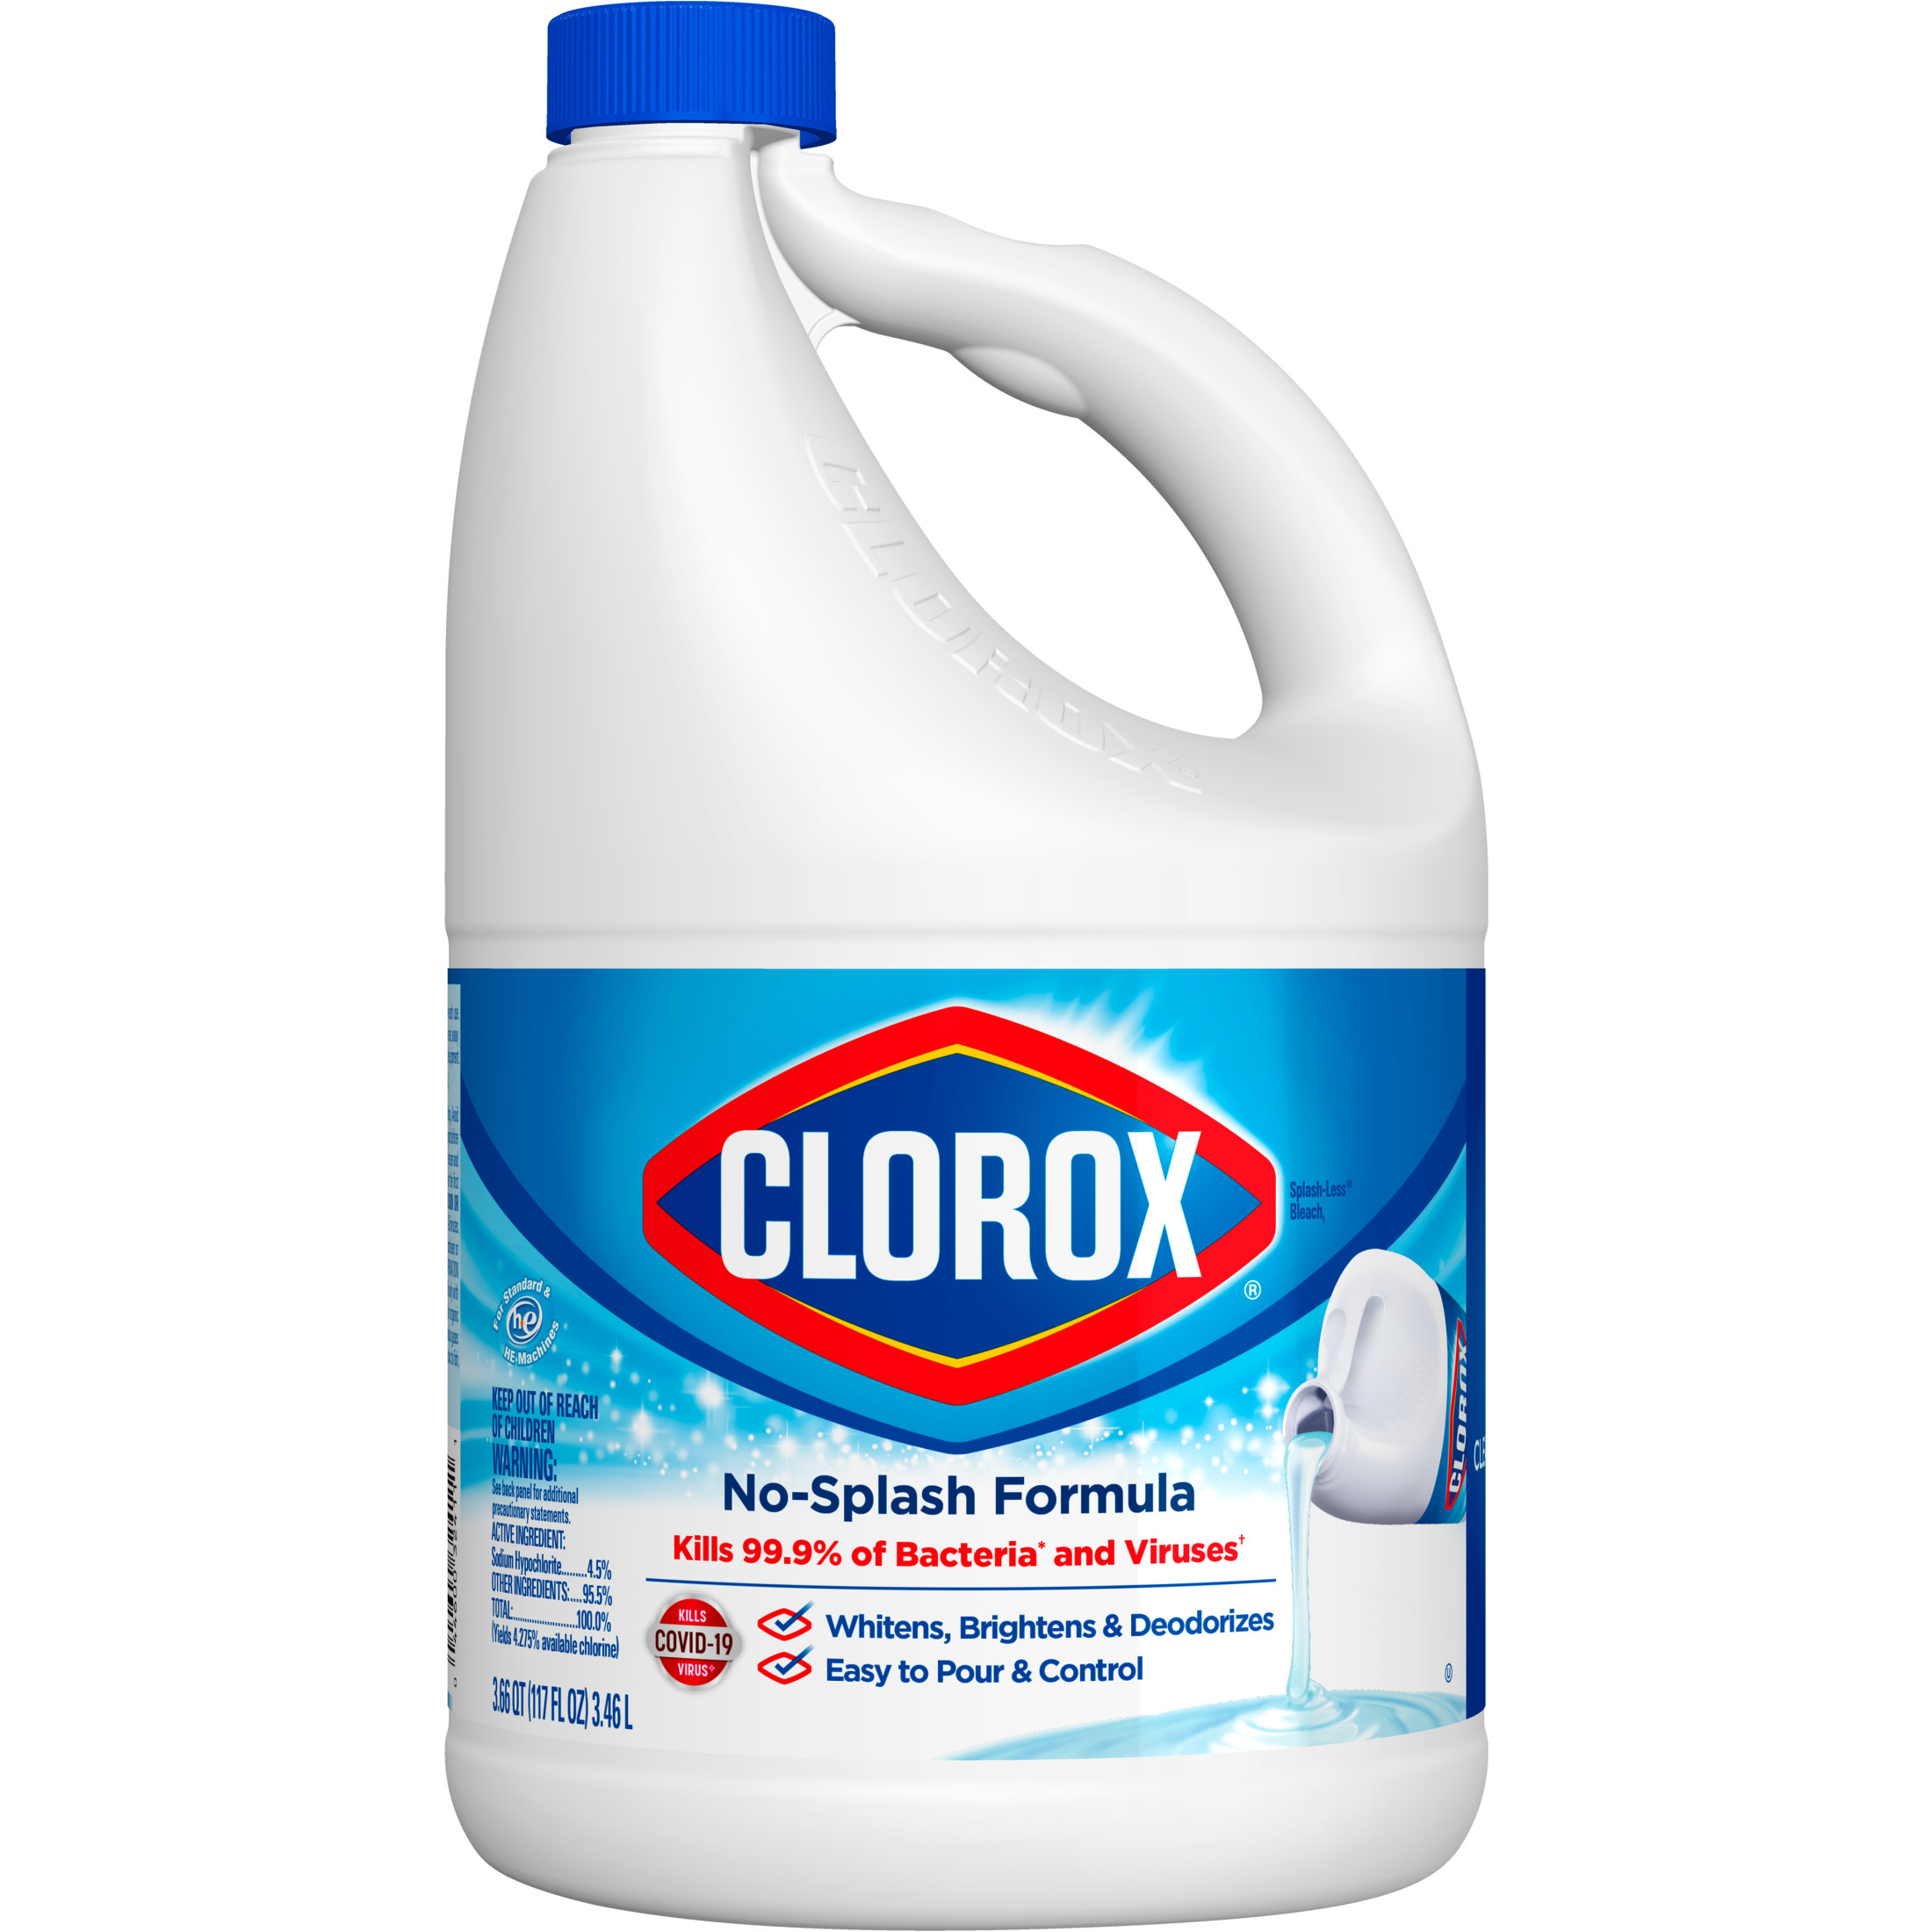 Clorox Splash-Less Liquid Bleach Cleaner, Regular Scent, 117 fl oz - image 2 of 8